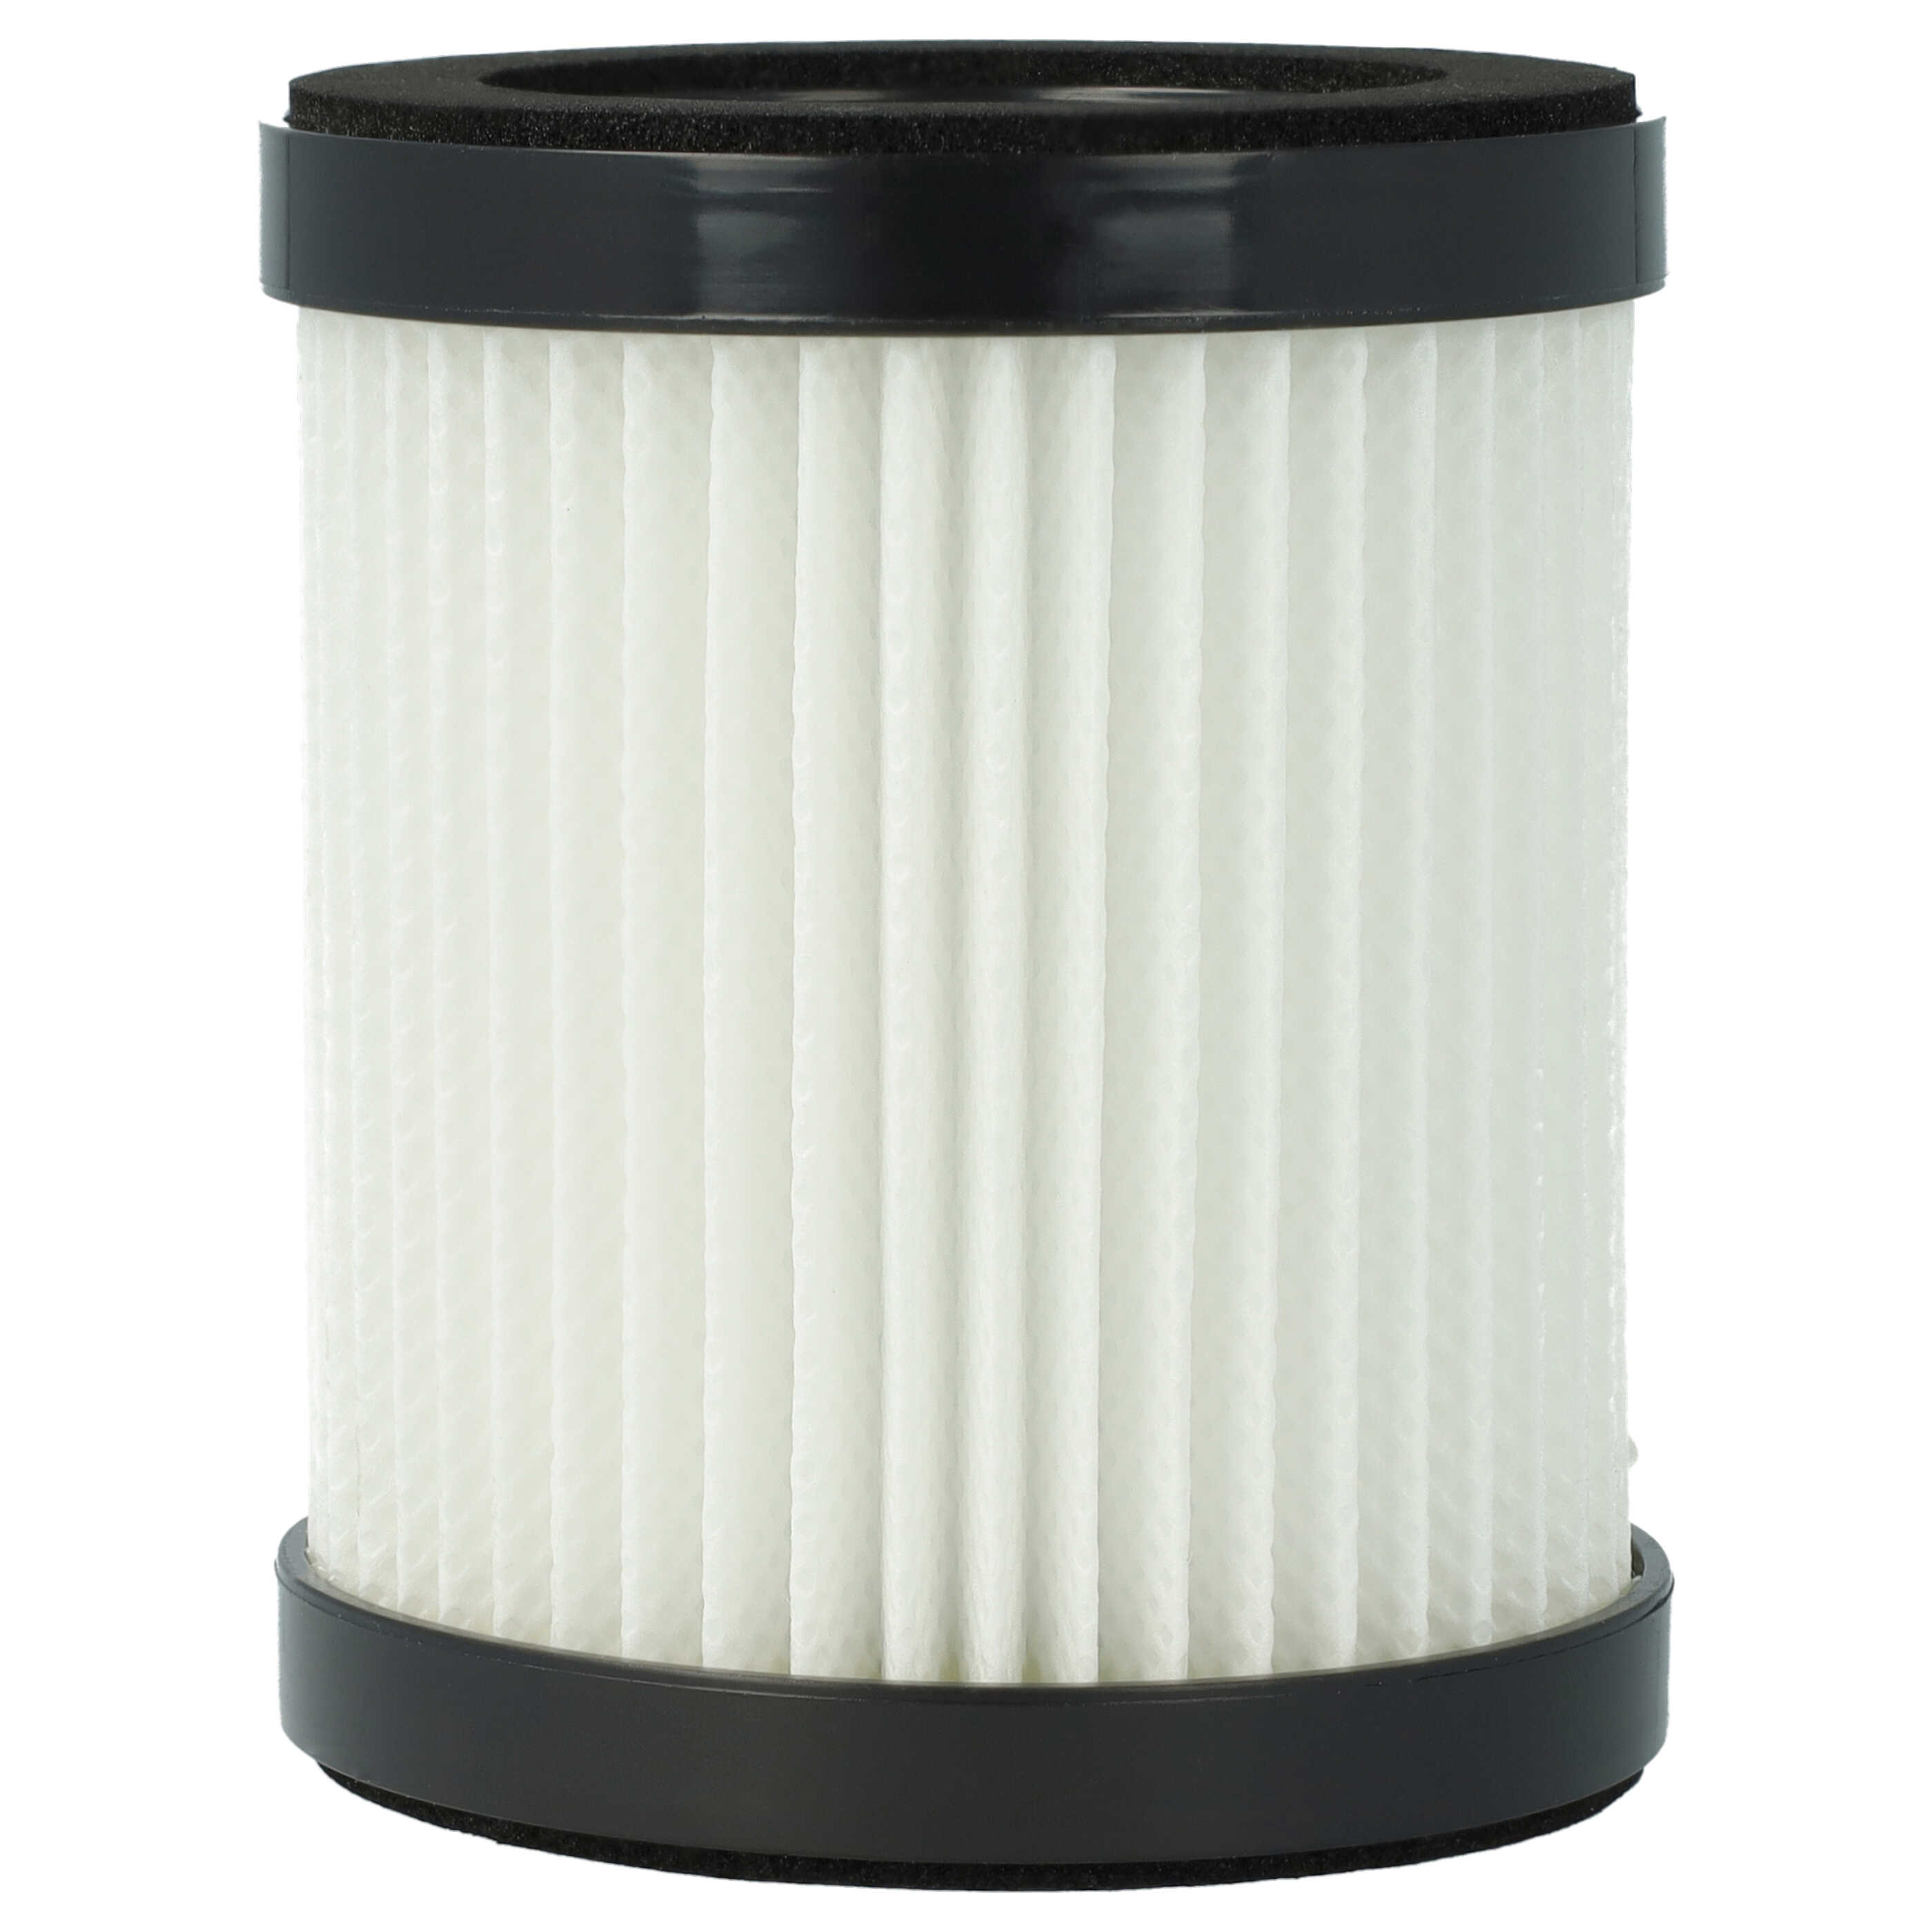 2x Filtro para aspiradora XL-618A Moosoo, Beldray XL-618A - filtro